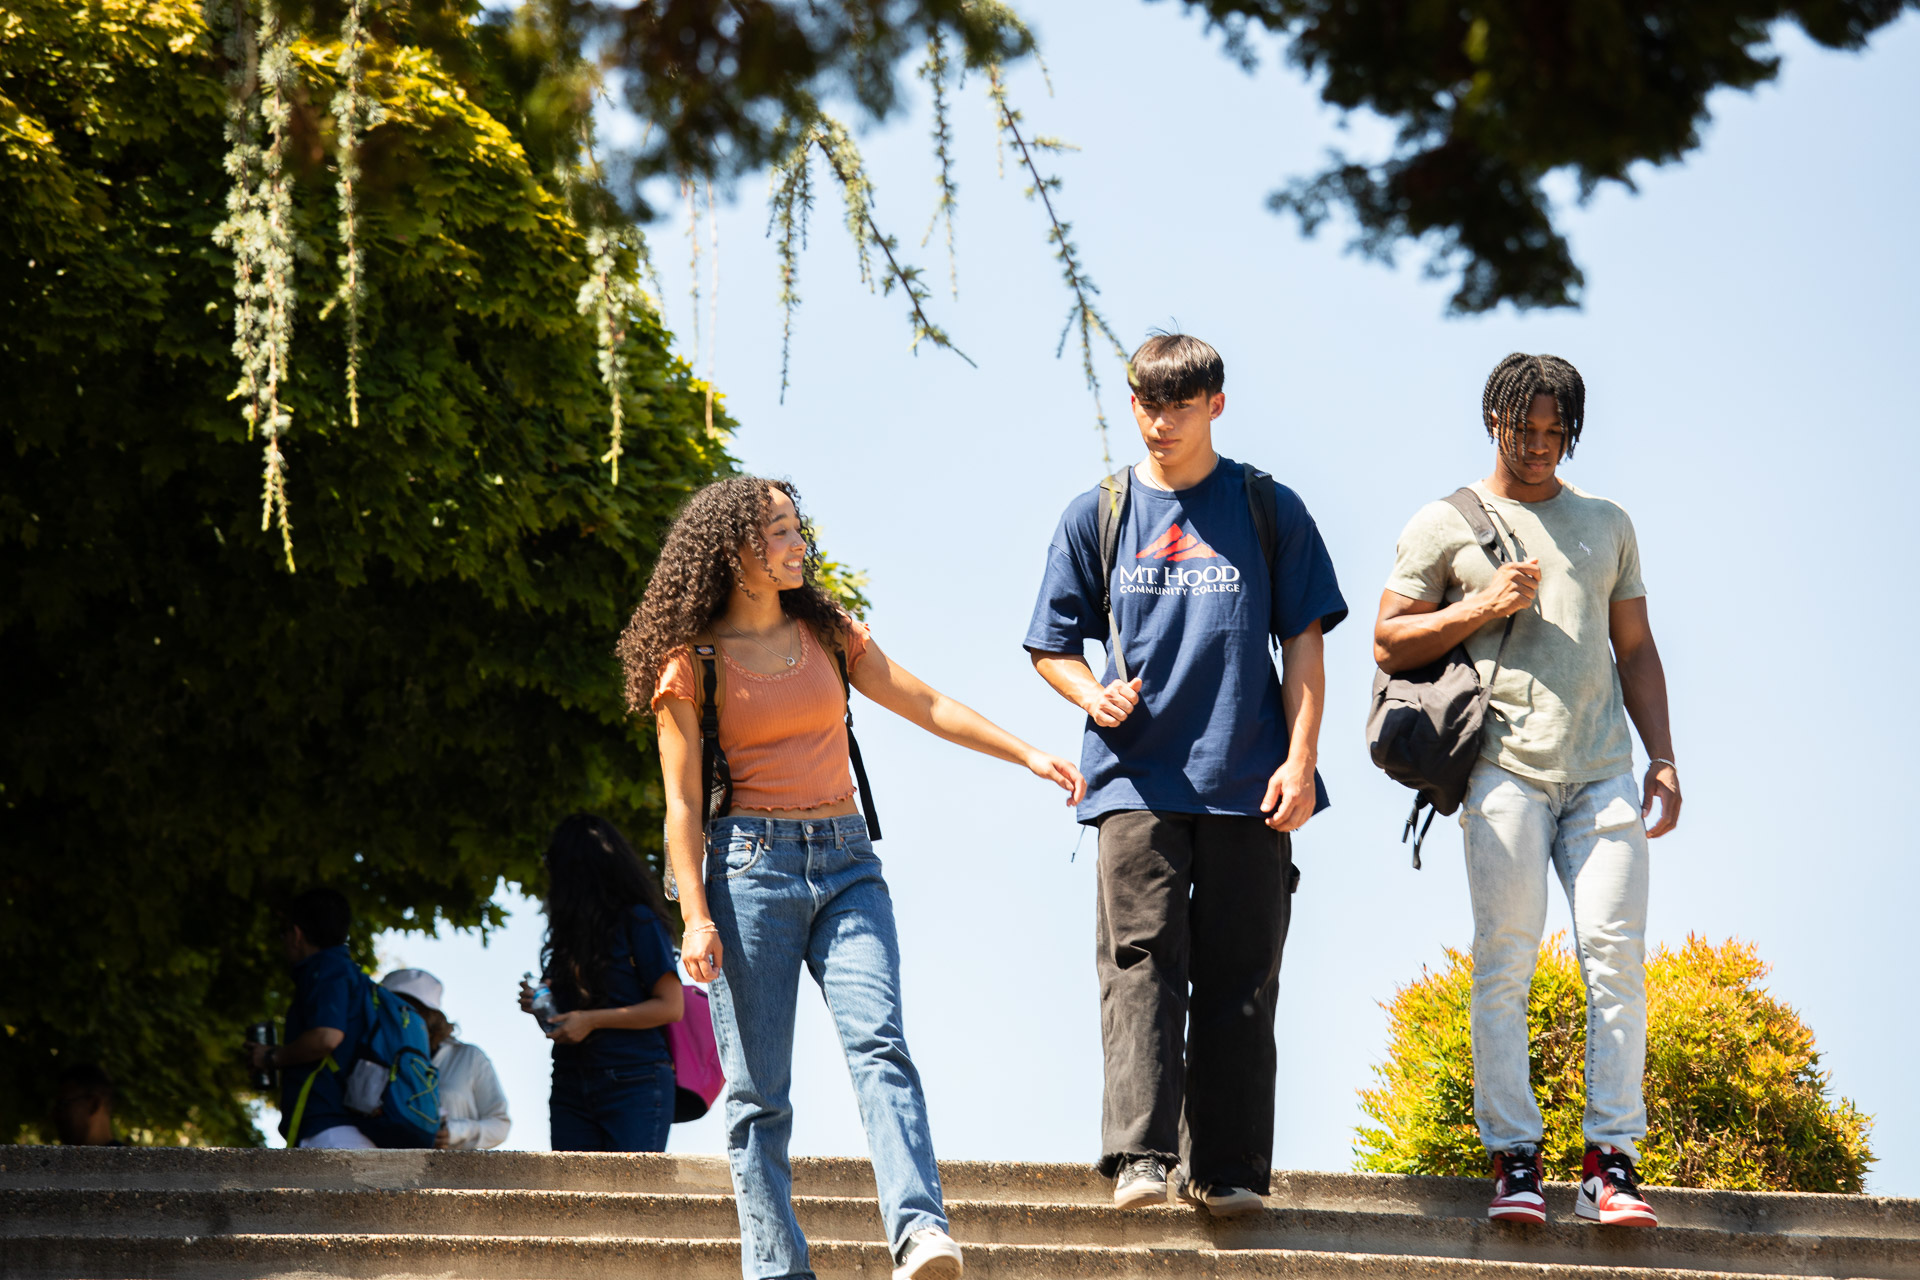 Students walking around on campus